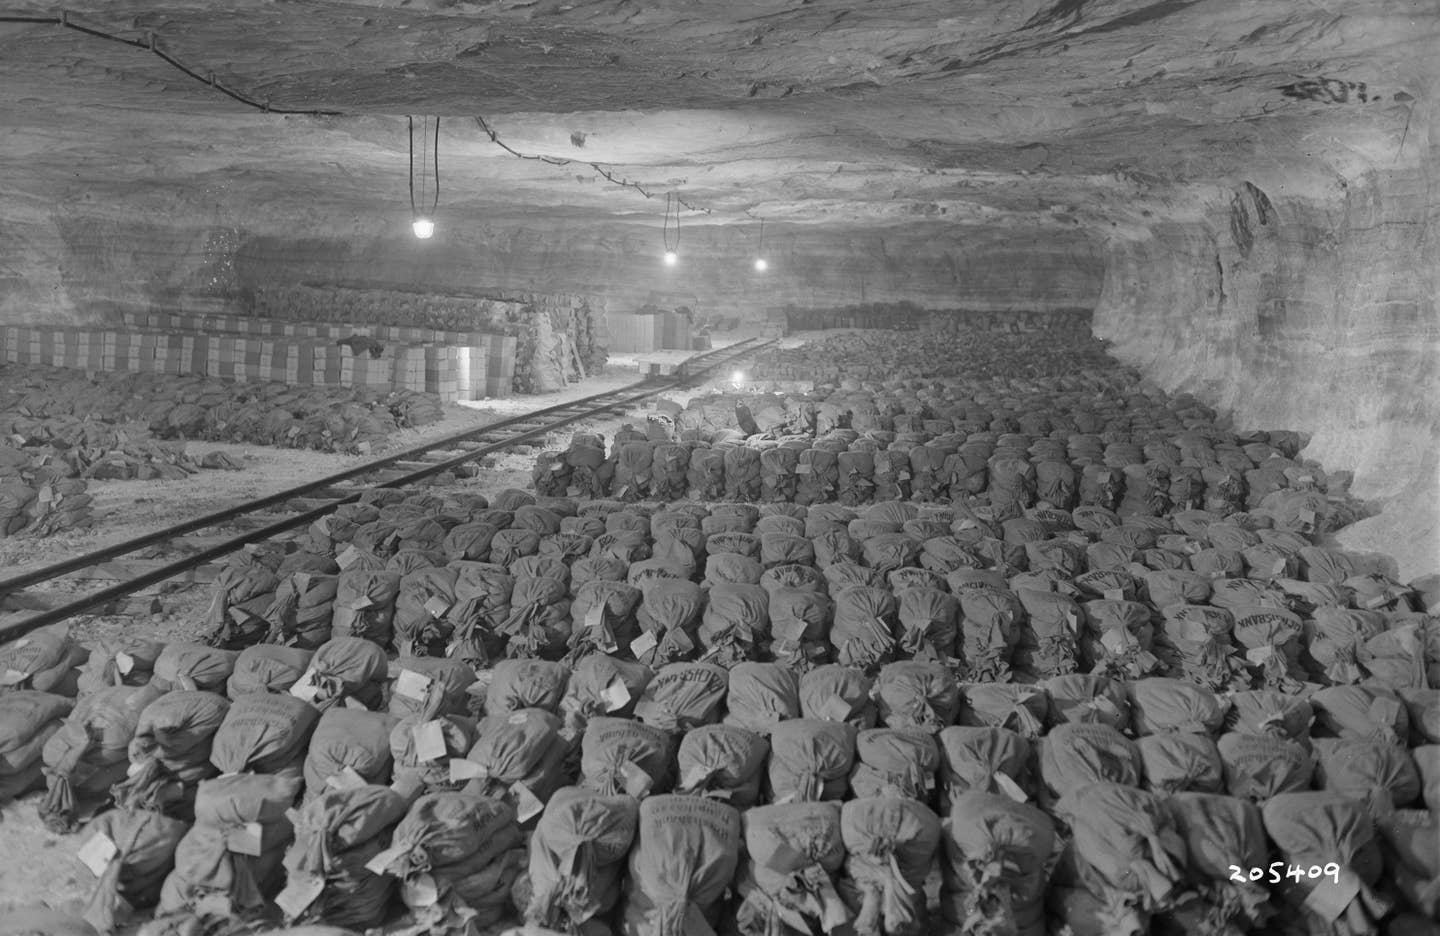 A Nazi gold stockpile in Merkers, Germany |U.S. Army